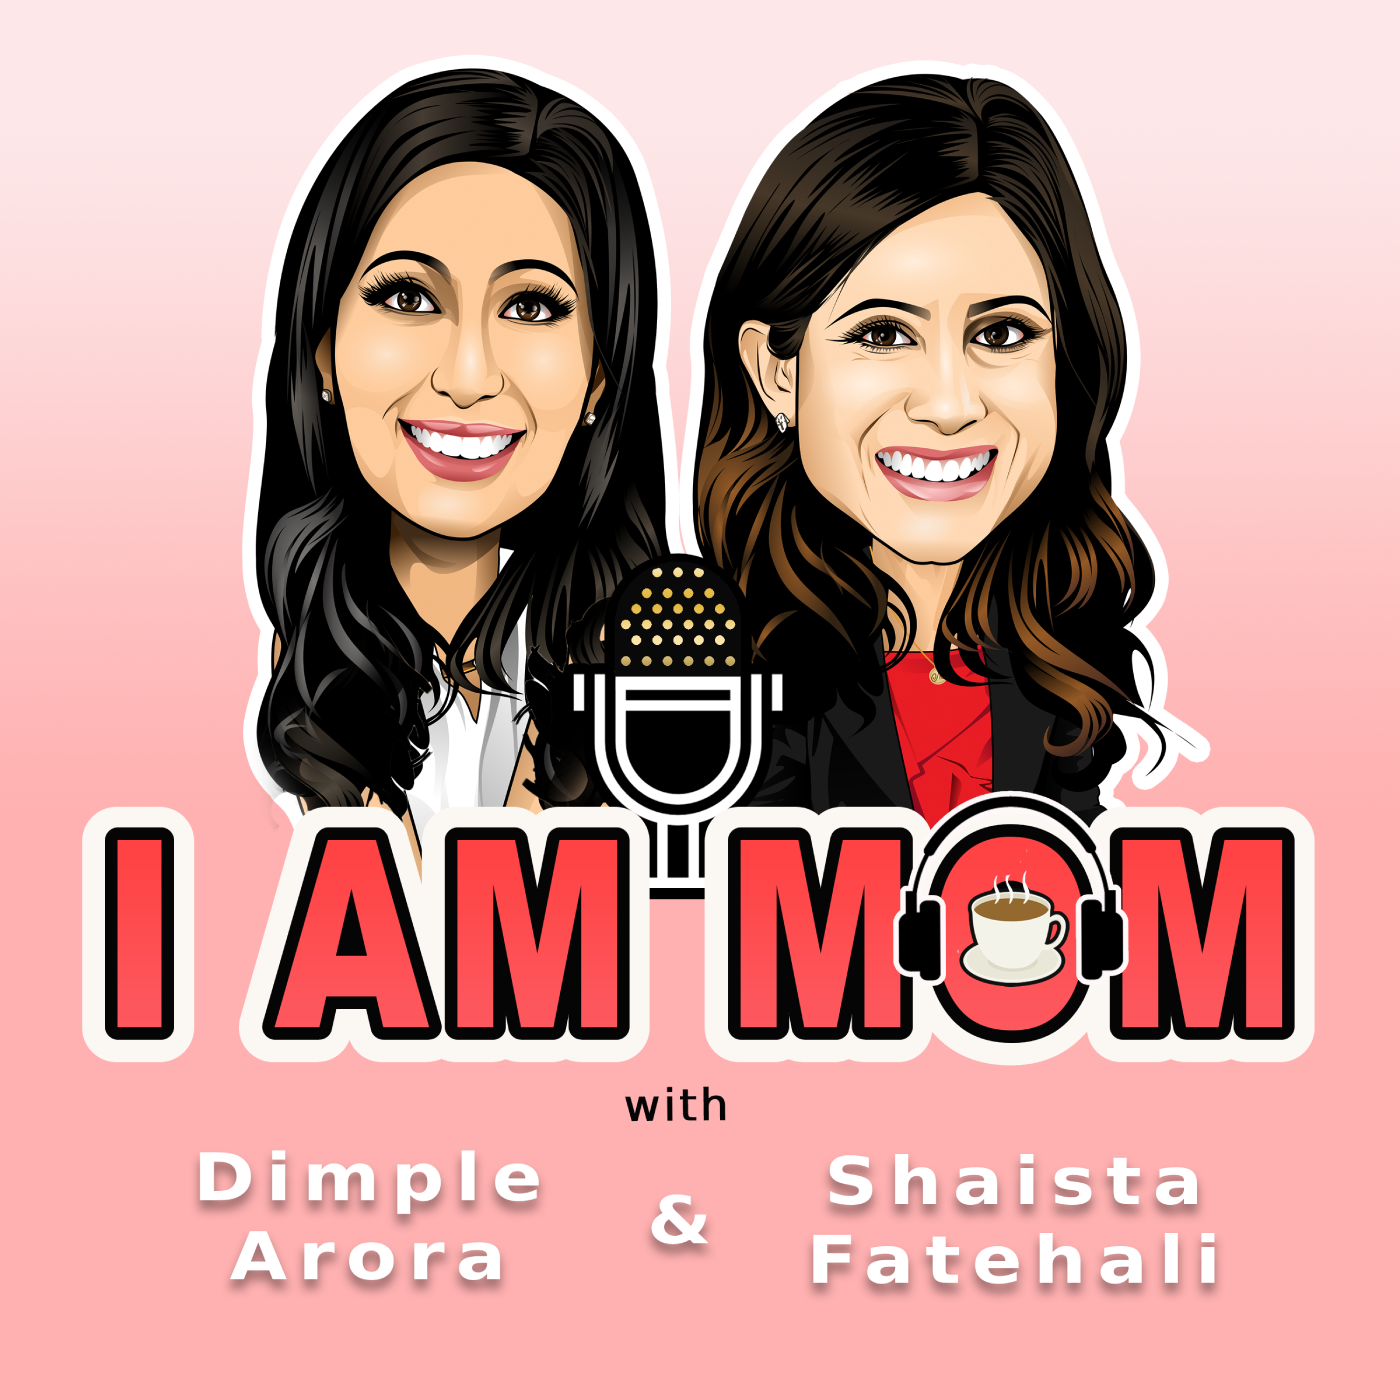 Money Career & Motherhood Podcast